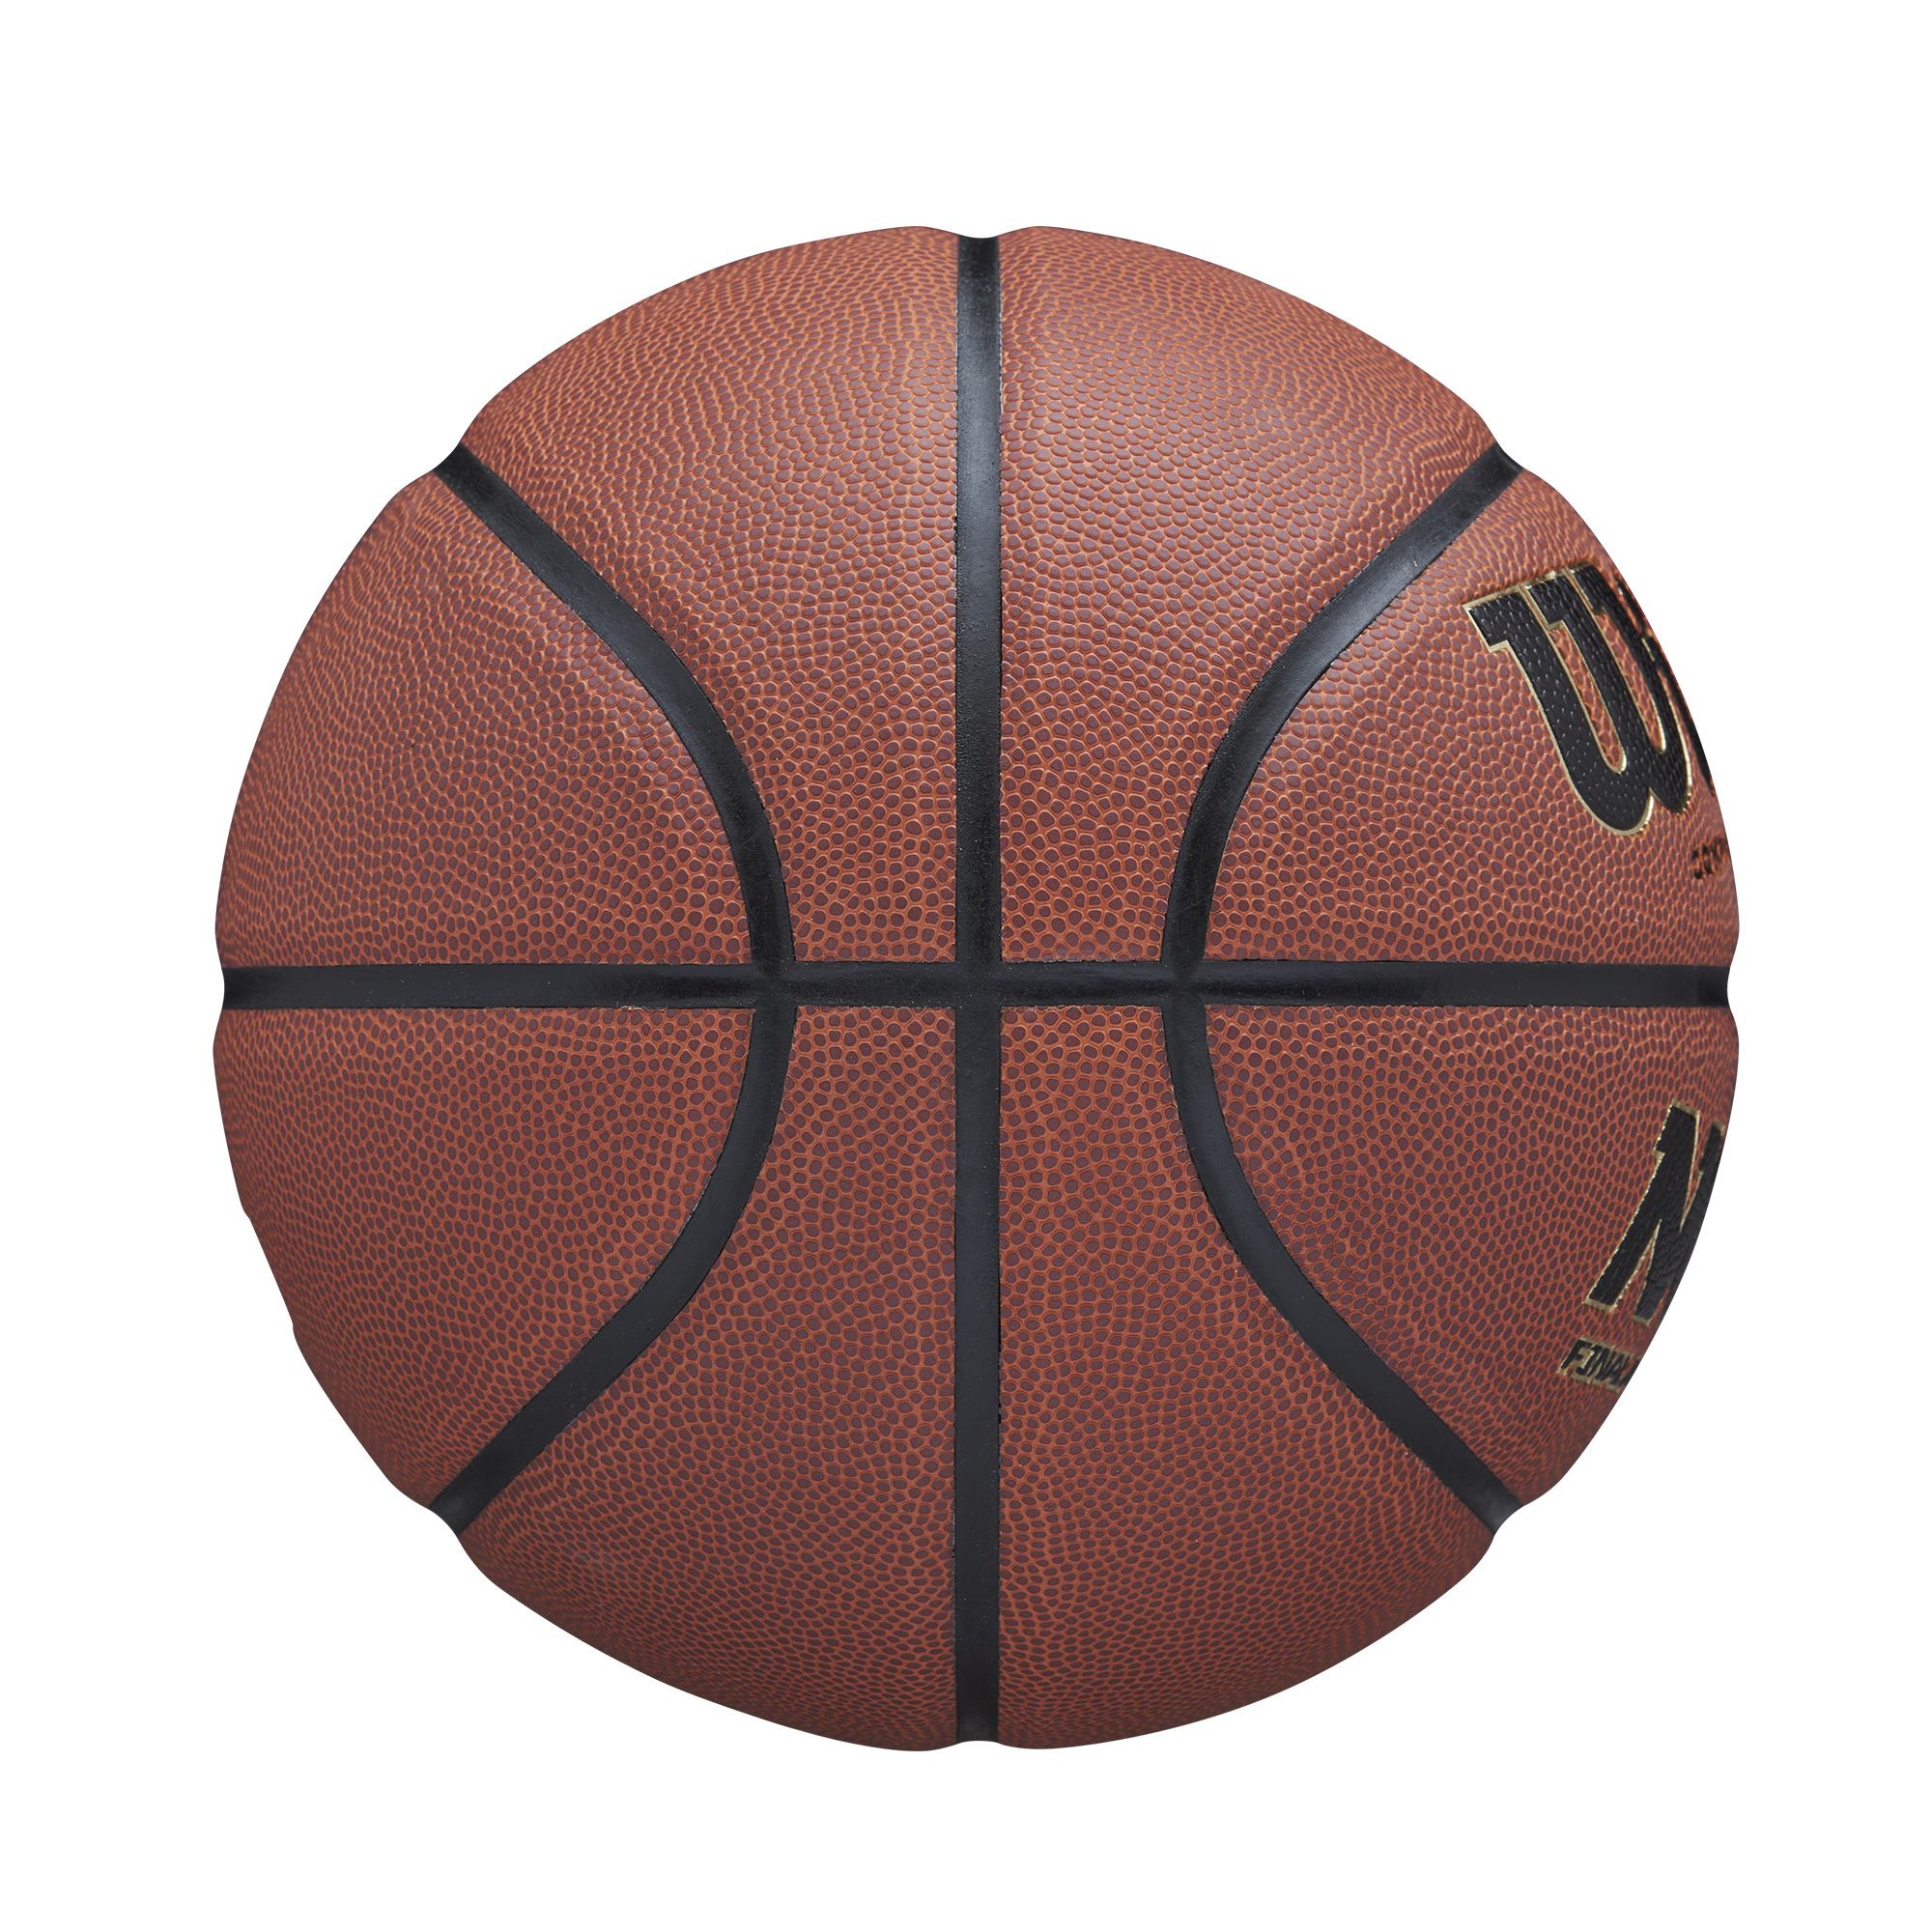 Wilson NCAA Final Four Edition Basketball, Intermediate Size - 28.5" - image 4 of 6